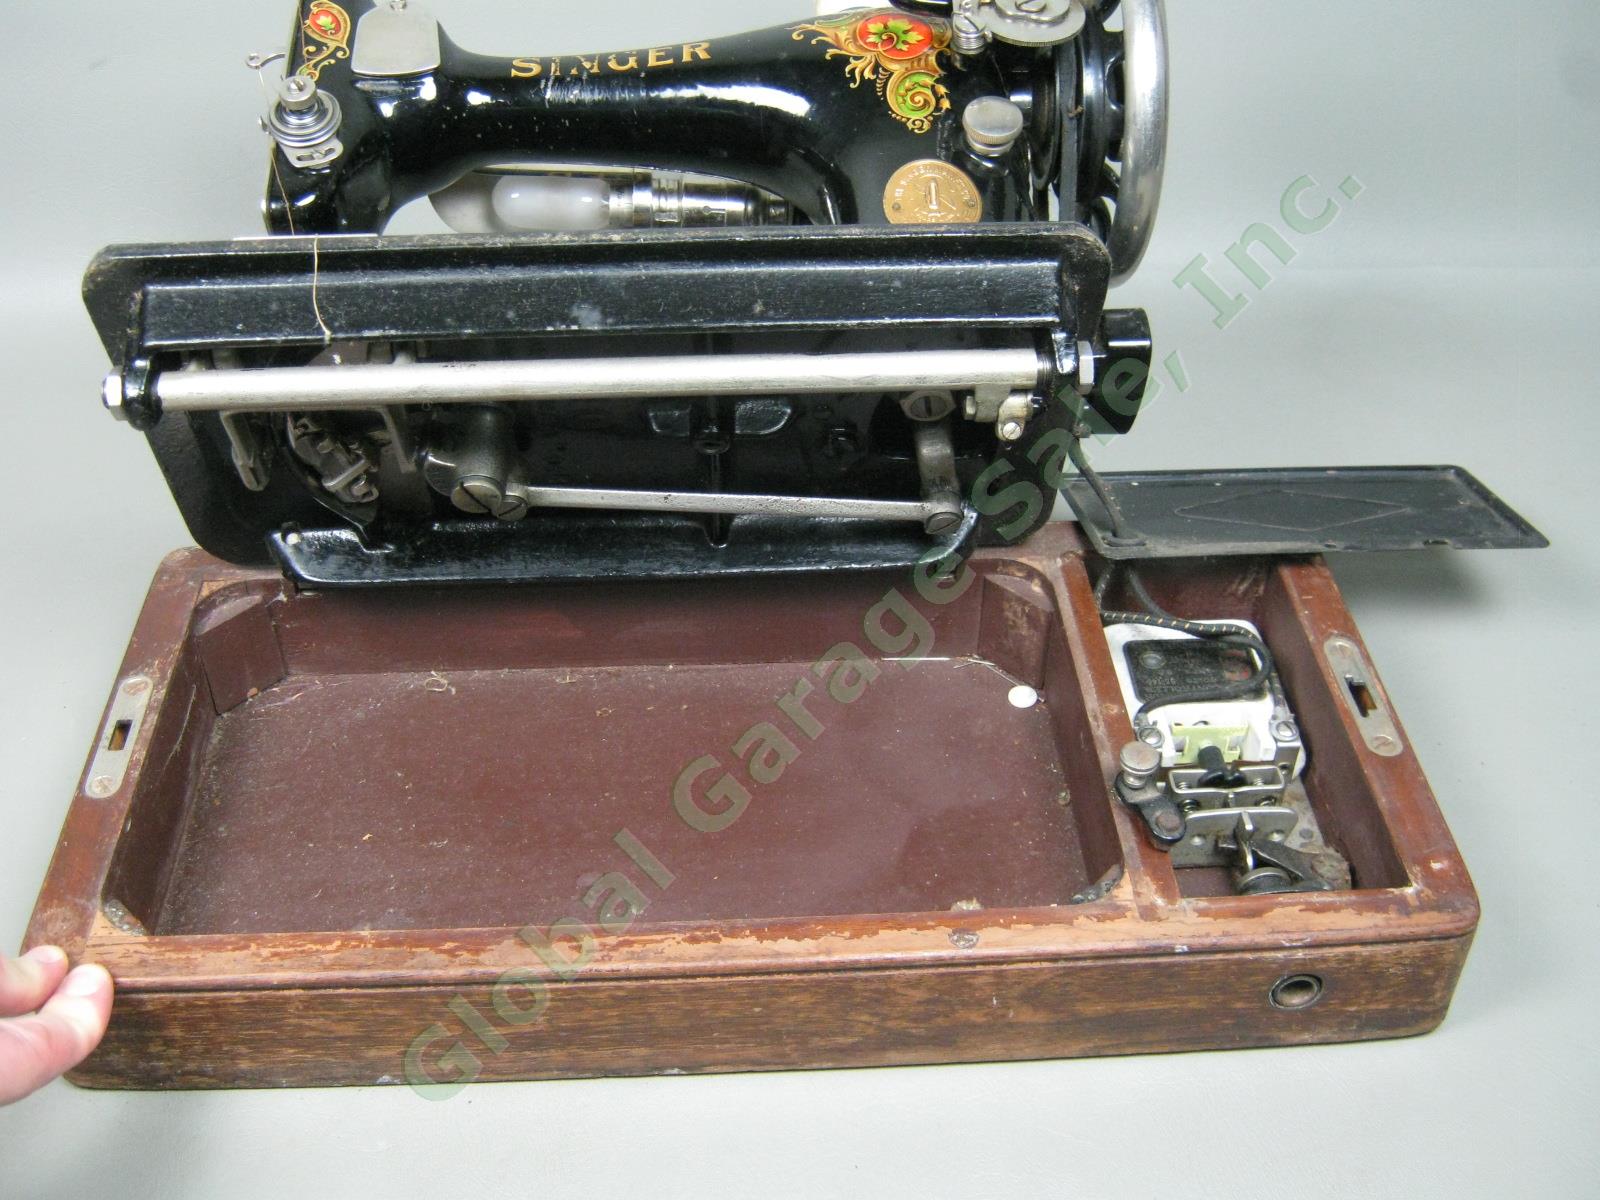 Vtg Antique 1929 Singer Knee Control Sewing Machine #128 W/ Case Serial AC610540 2